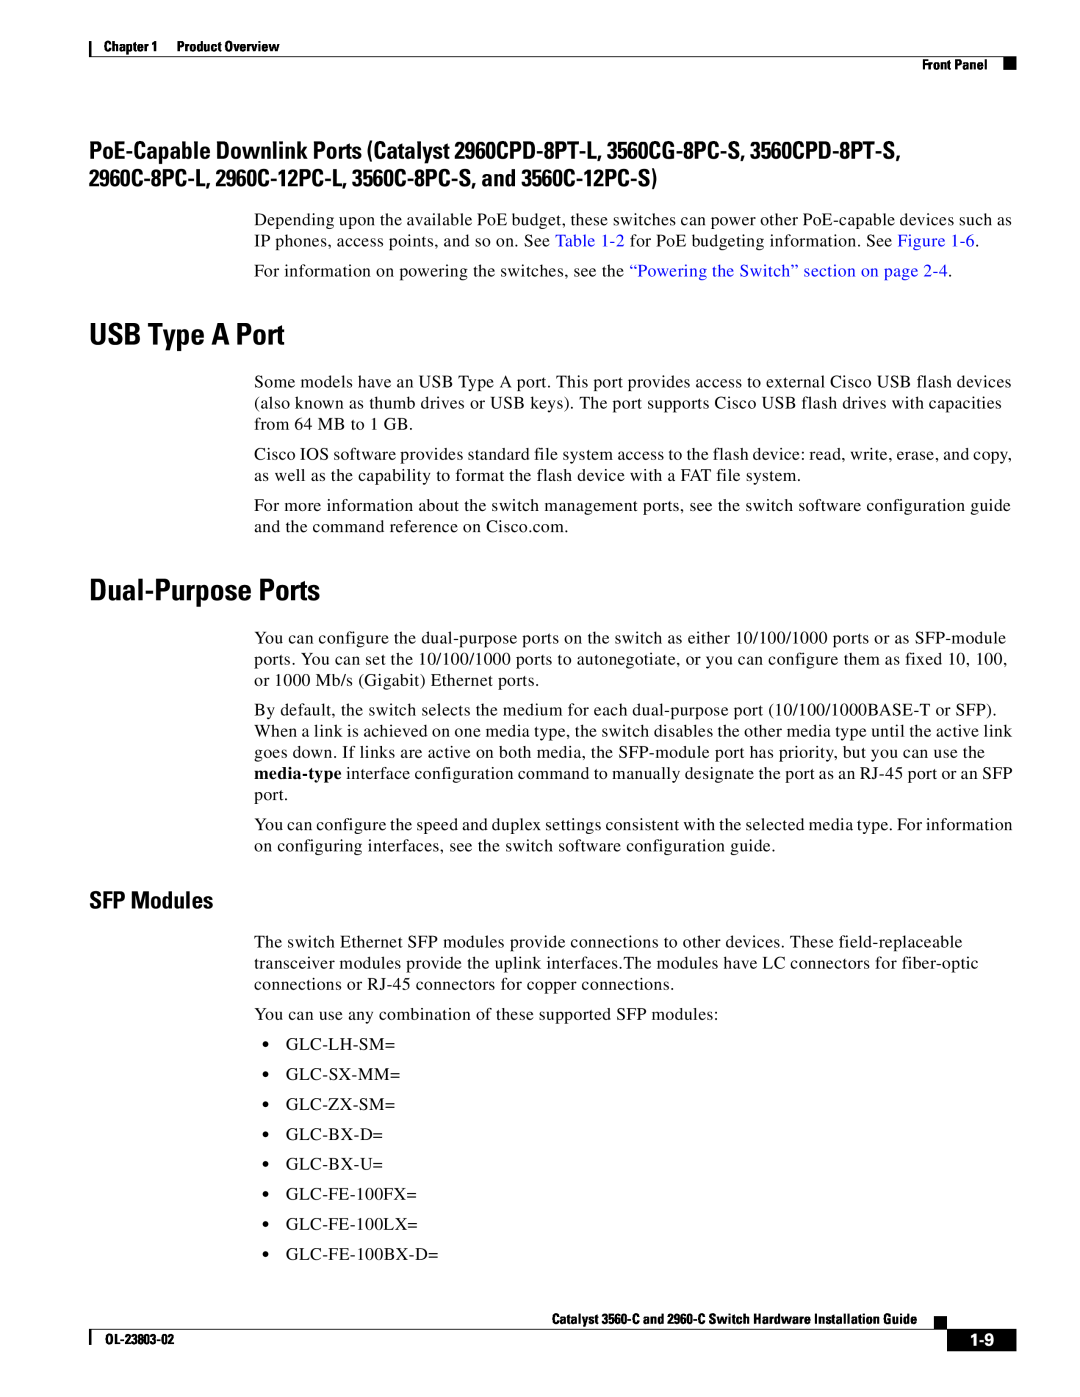 Cisco Systems 3560-C manual USB Type A Port, Dual-Purpose Ports, SFP Modules 